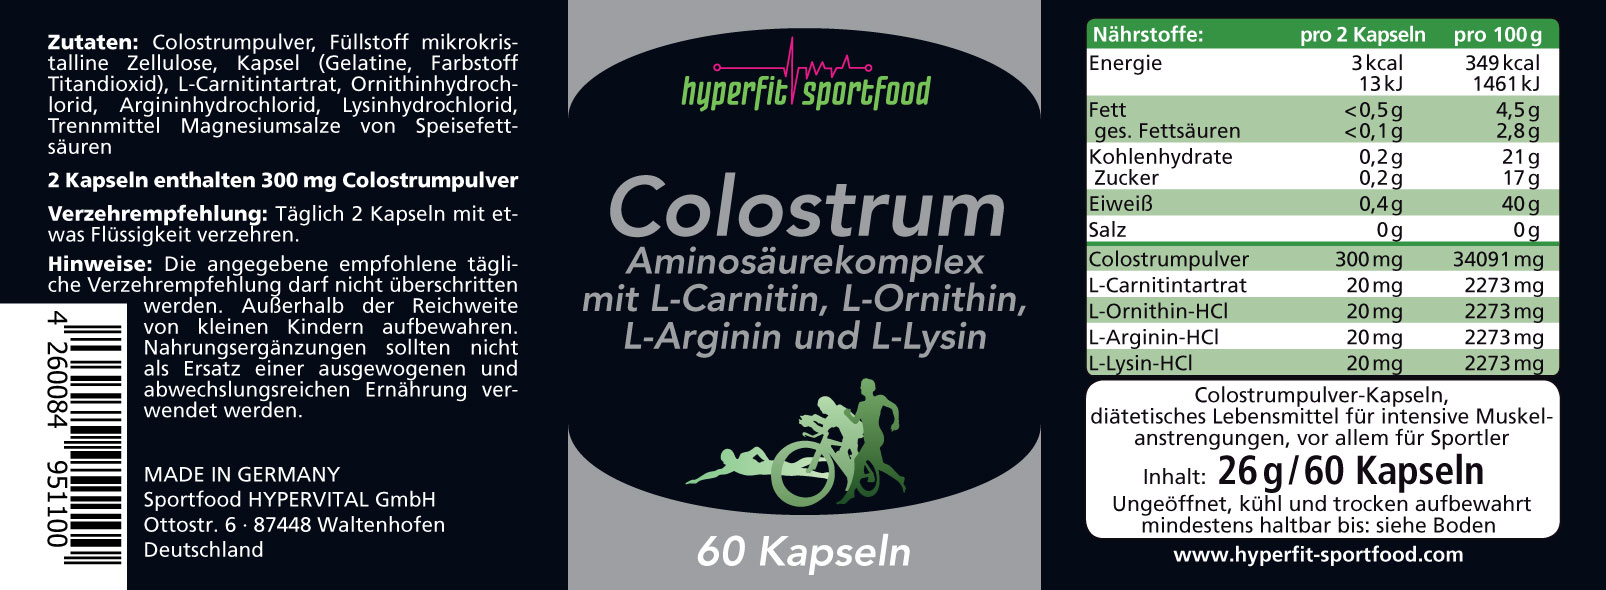 Colostrum-Info